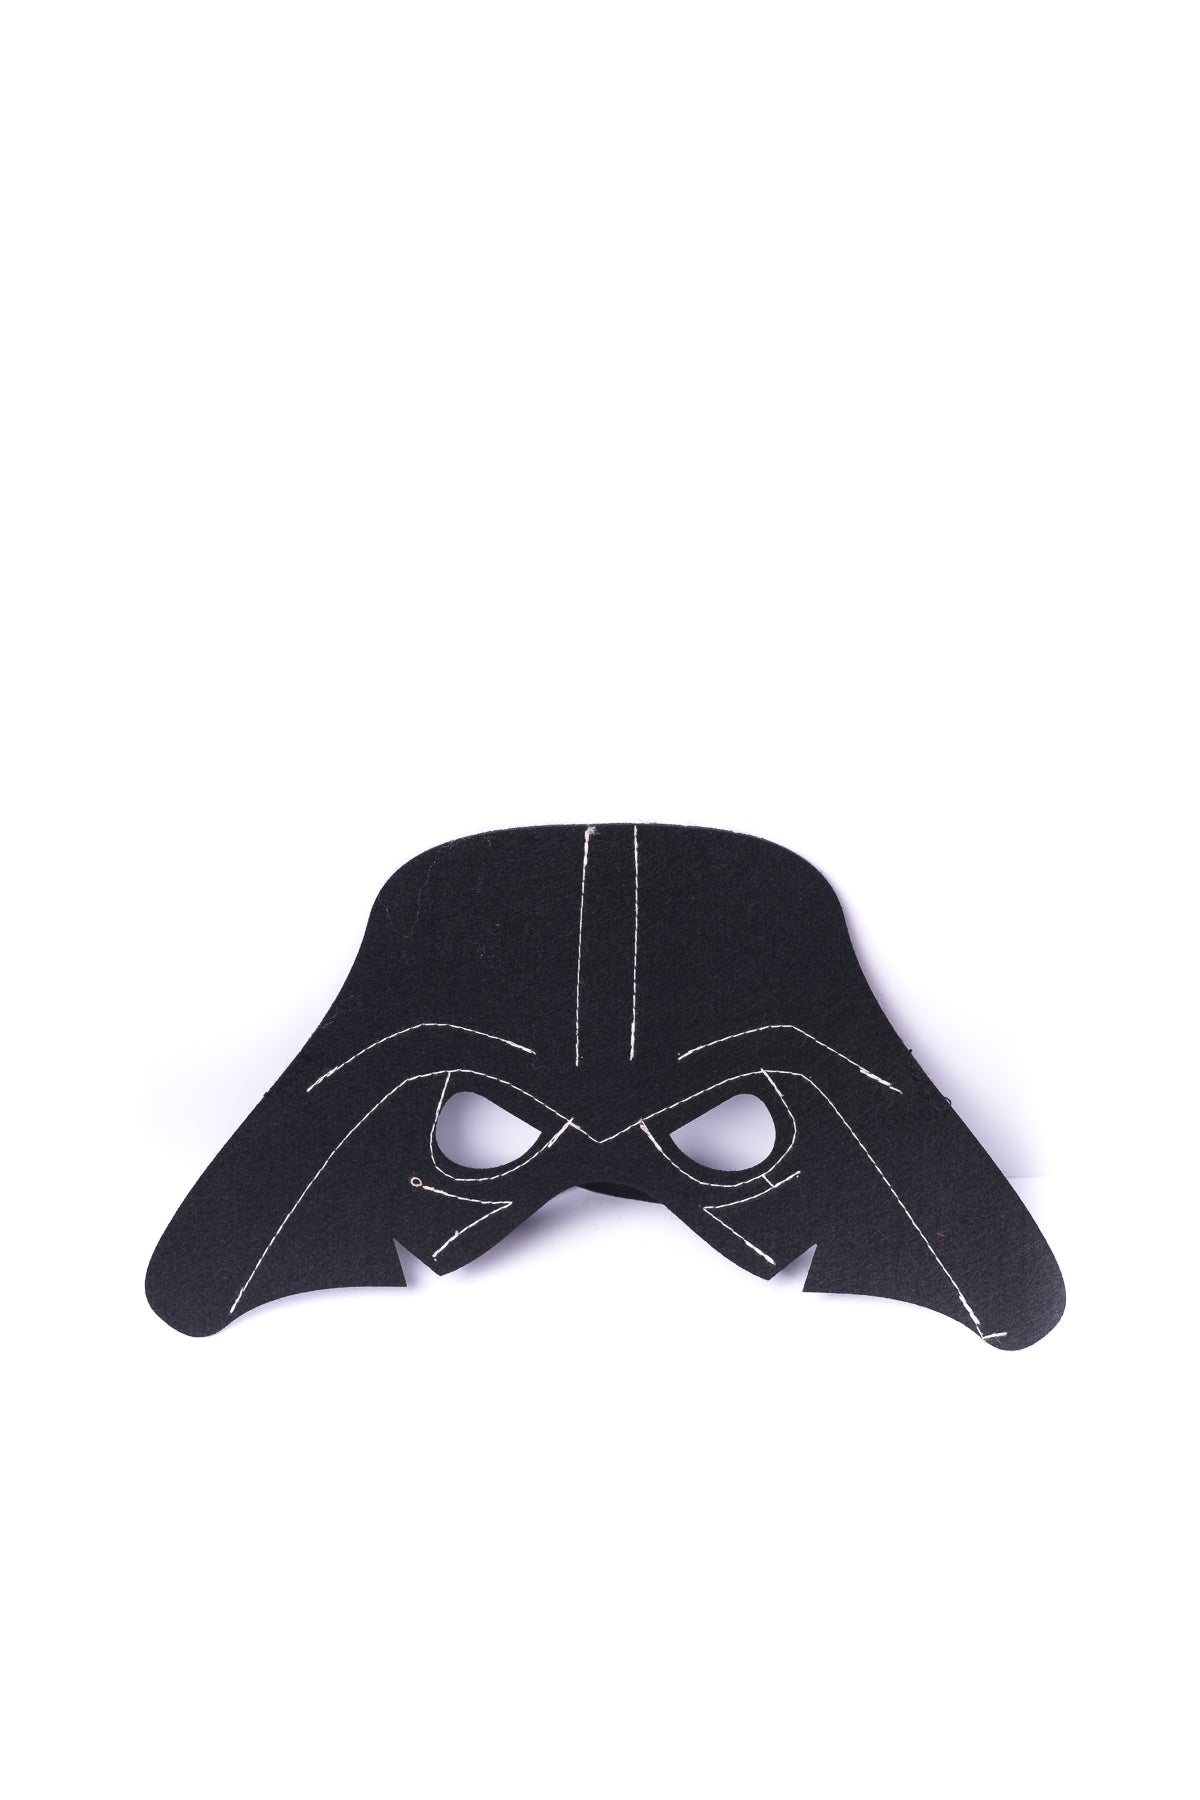 Darth Vader Mask and Cape Set